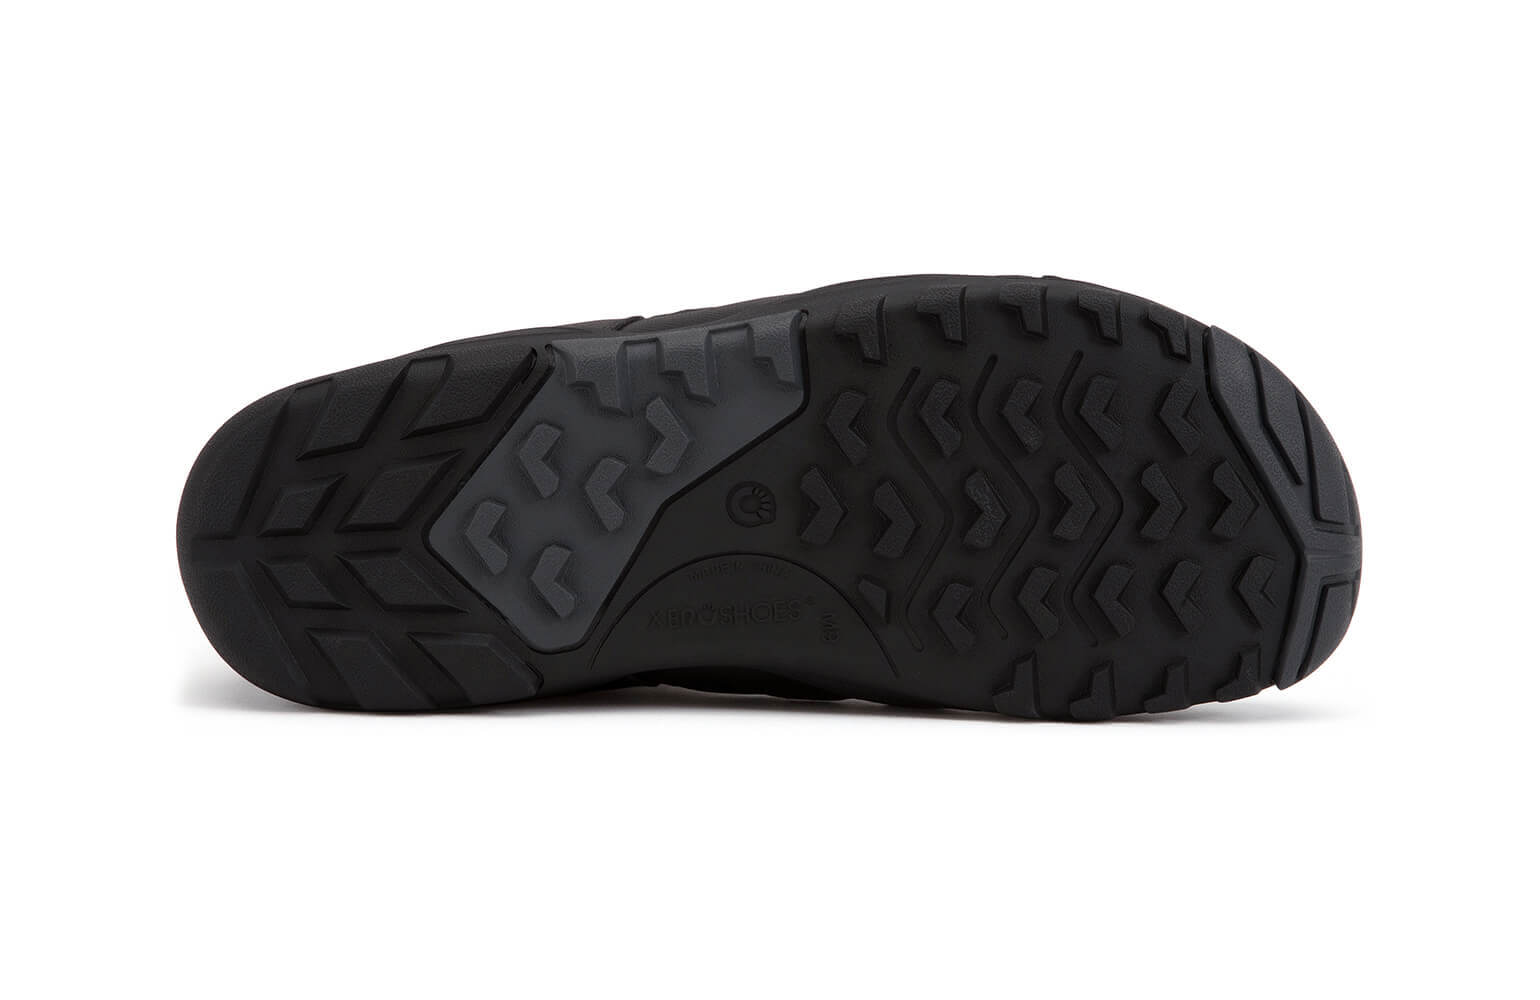 Xero Shoes | Alpine | black w/o trees [AEM-BLC] heren, maat 45 eu